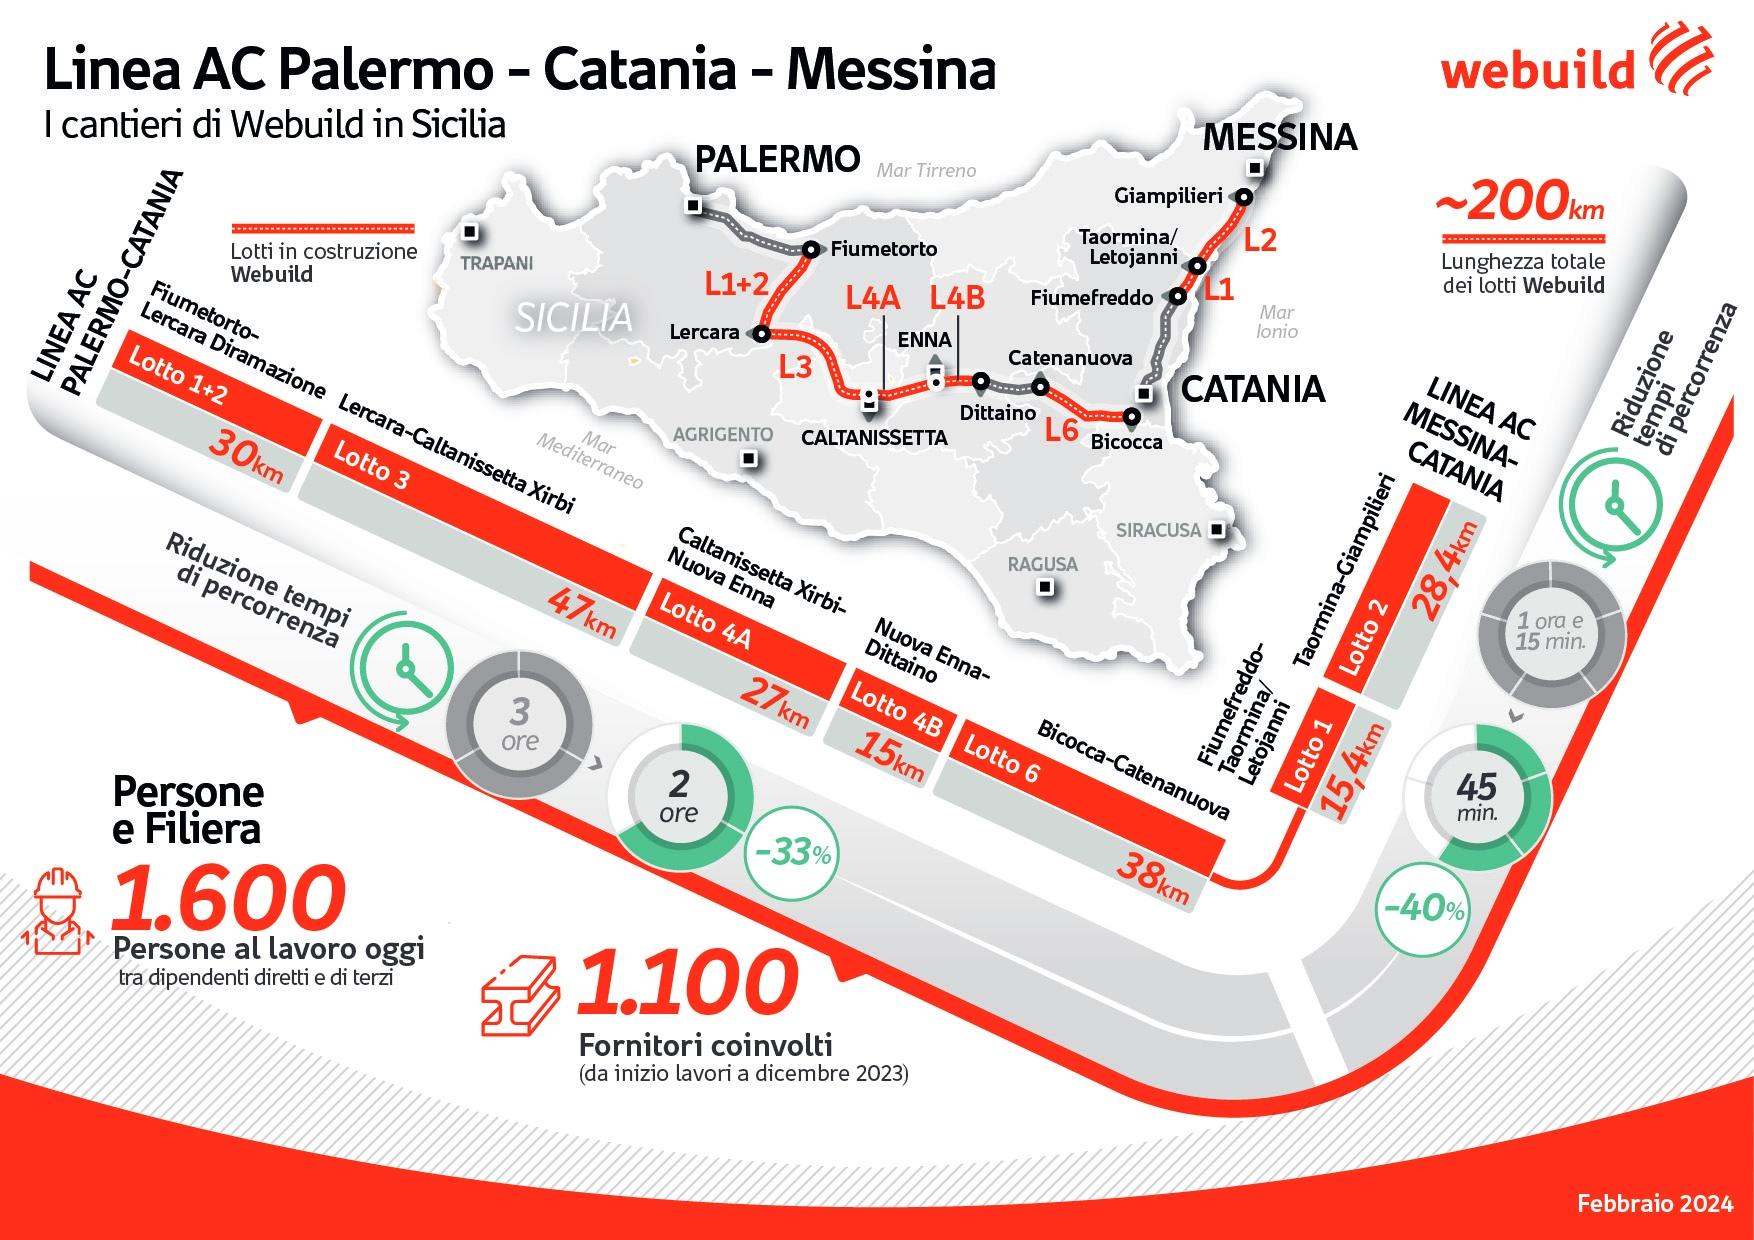 Infografica Linea AC Palermo-Catania-Messina, i cantieri Webuild in Sicilia